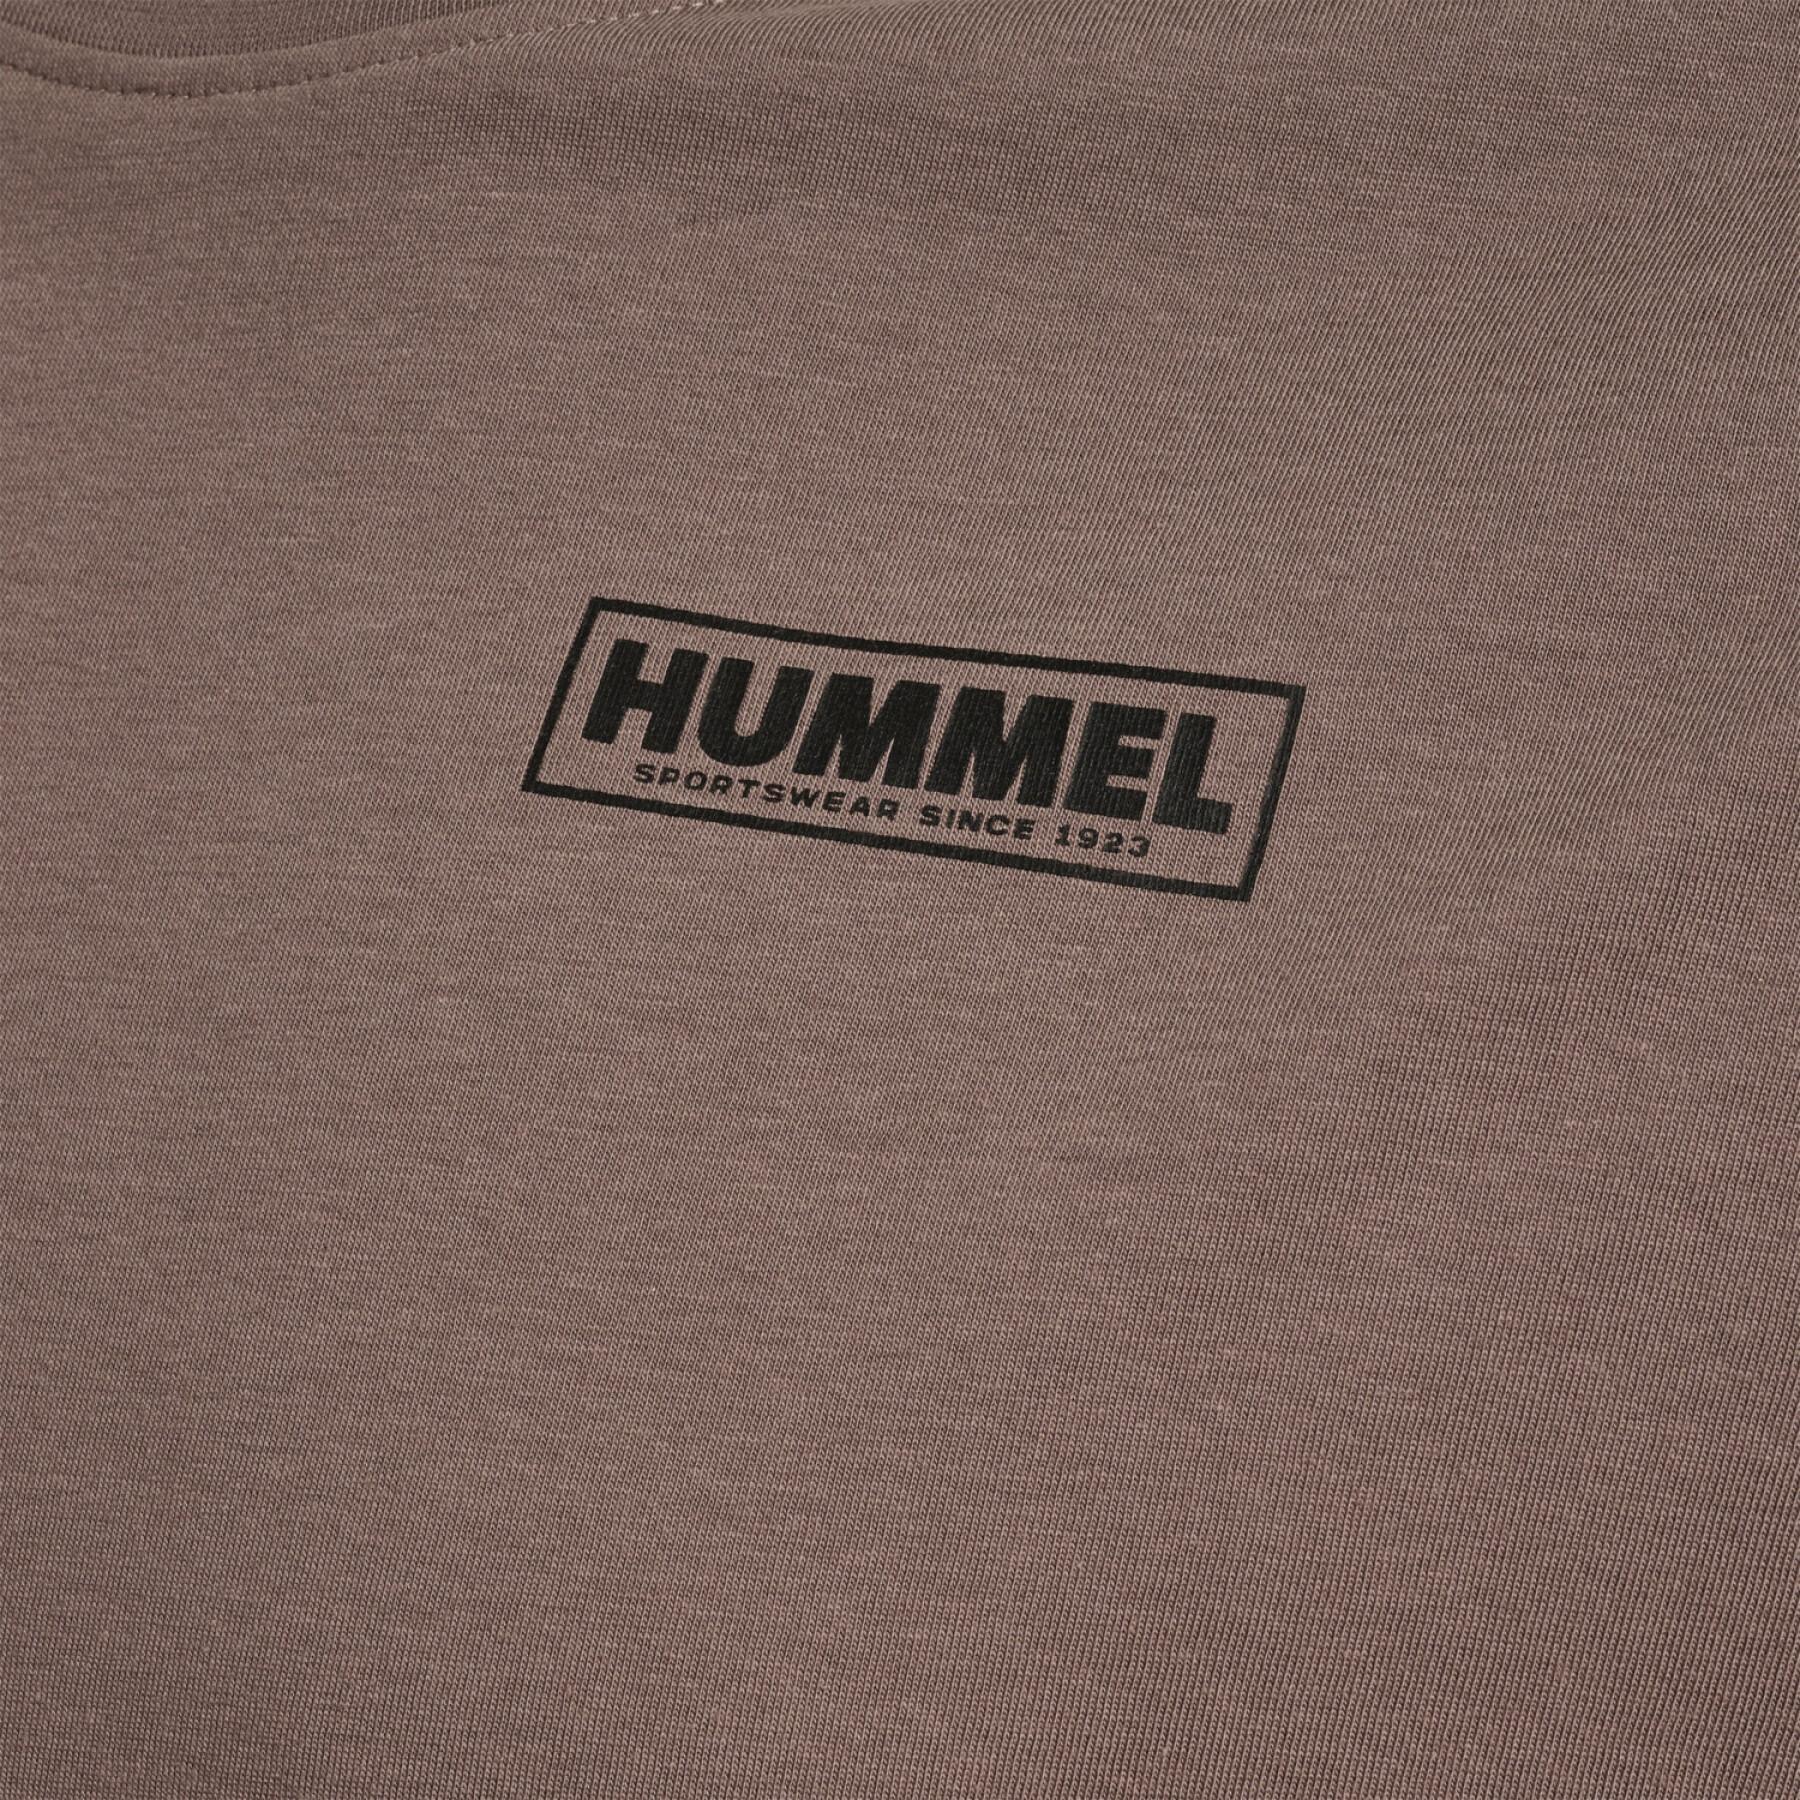 T-shirt meer Hummel Legacy